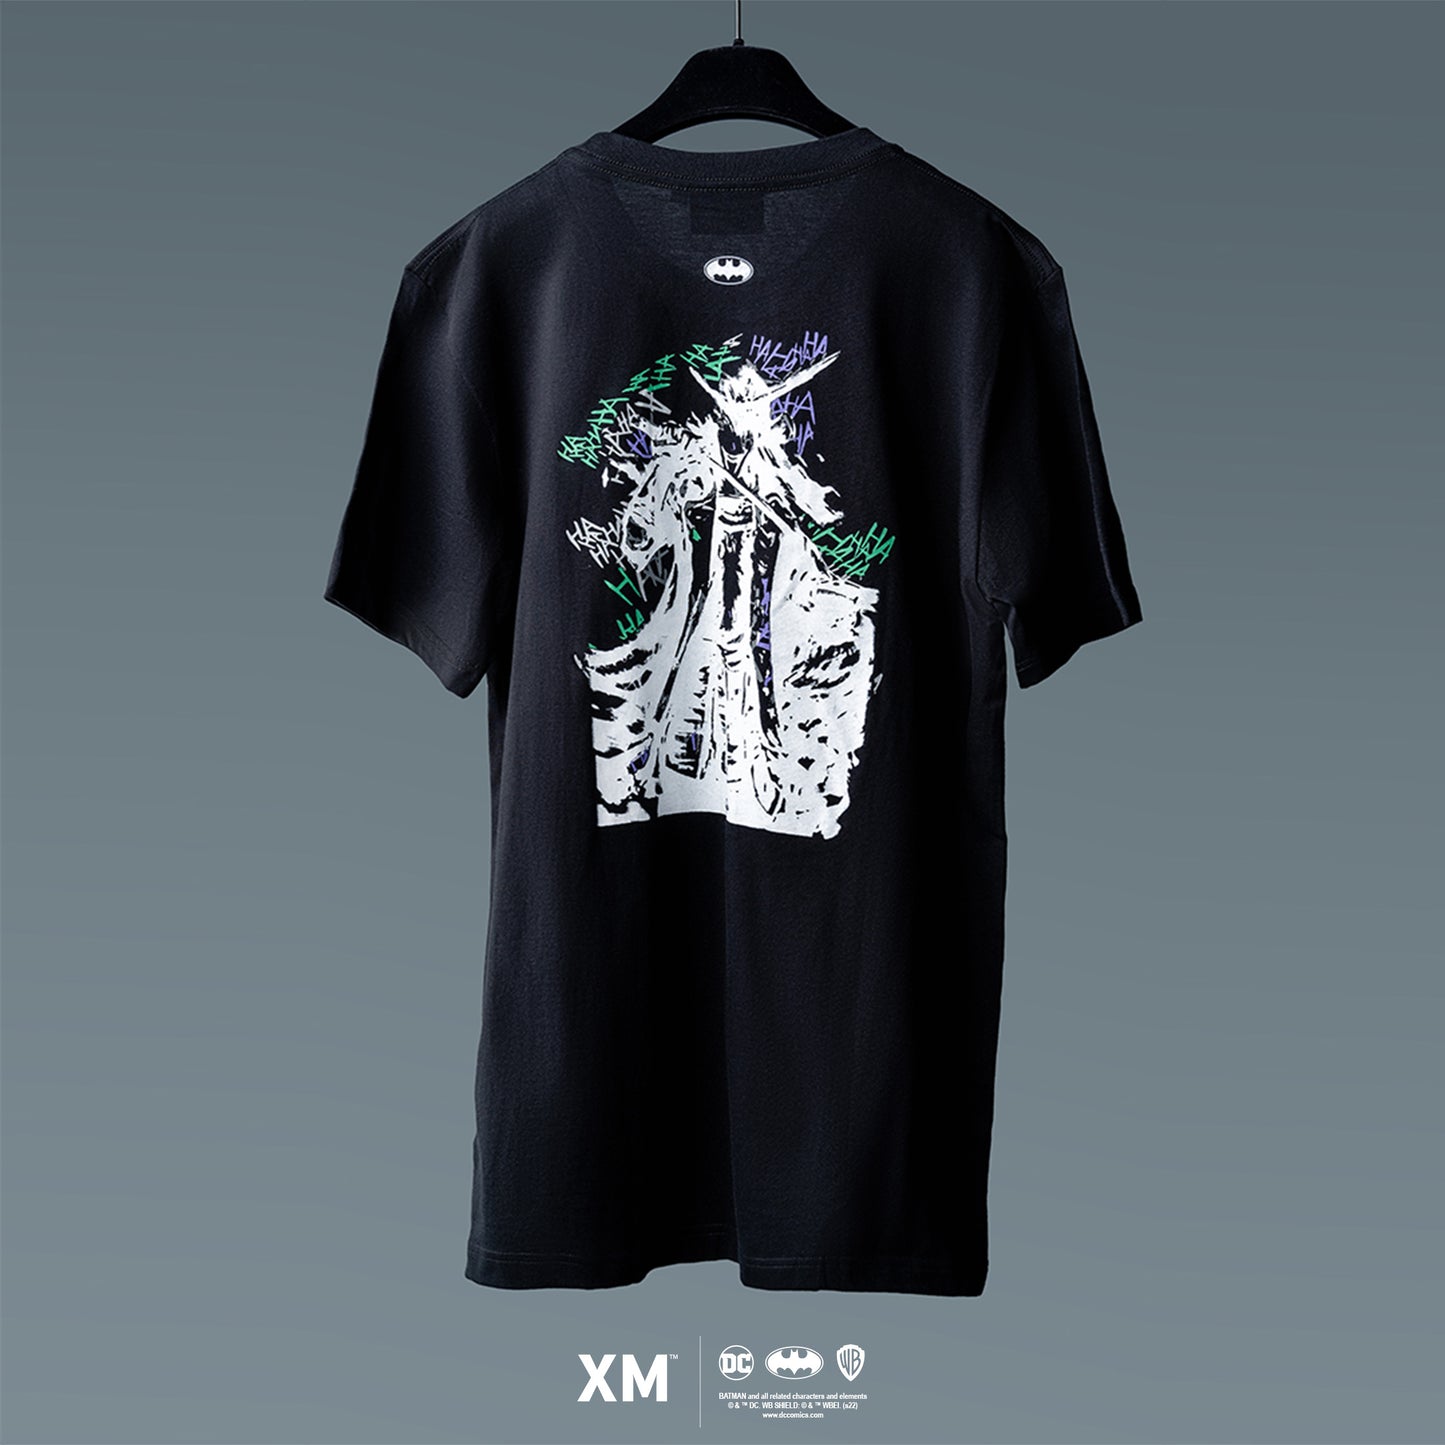 Batman Samurai Collection - Joker Orochi’s Portrait (Black) Tshirt